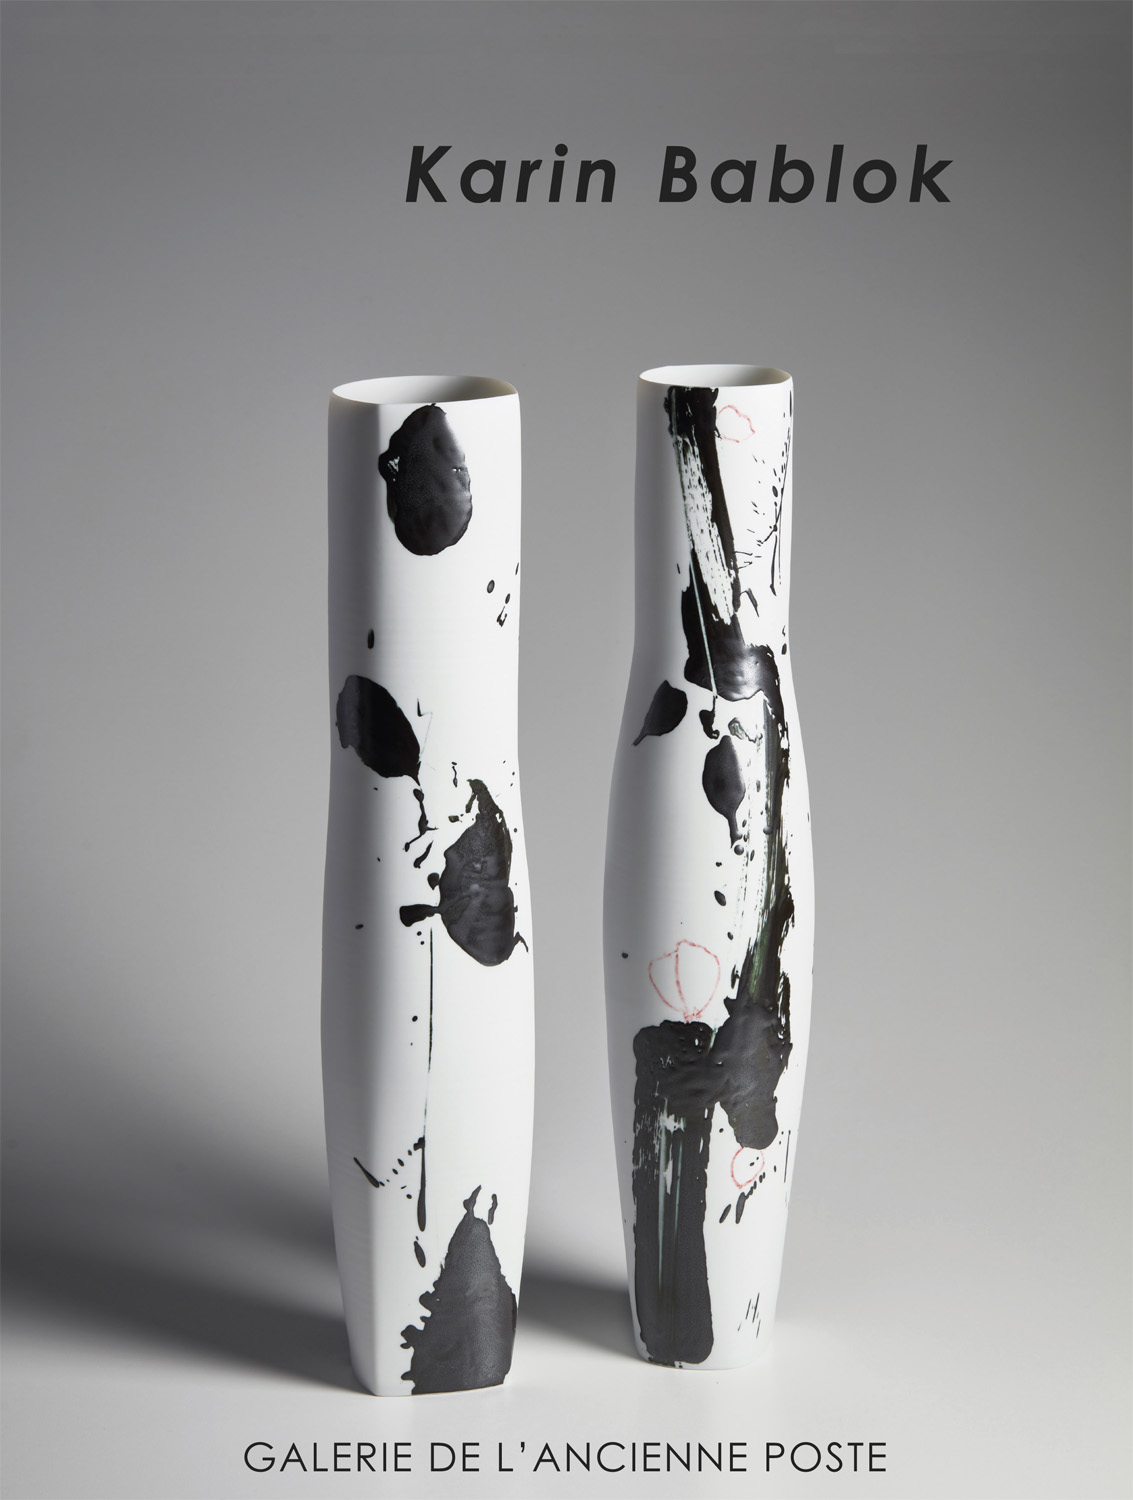 Karin Bablok catlogue - Karine Bablok exhibition catalogue - Karin Bablok exhibition